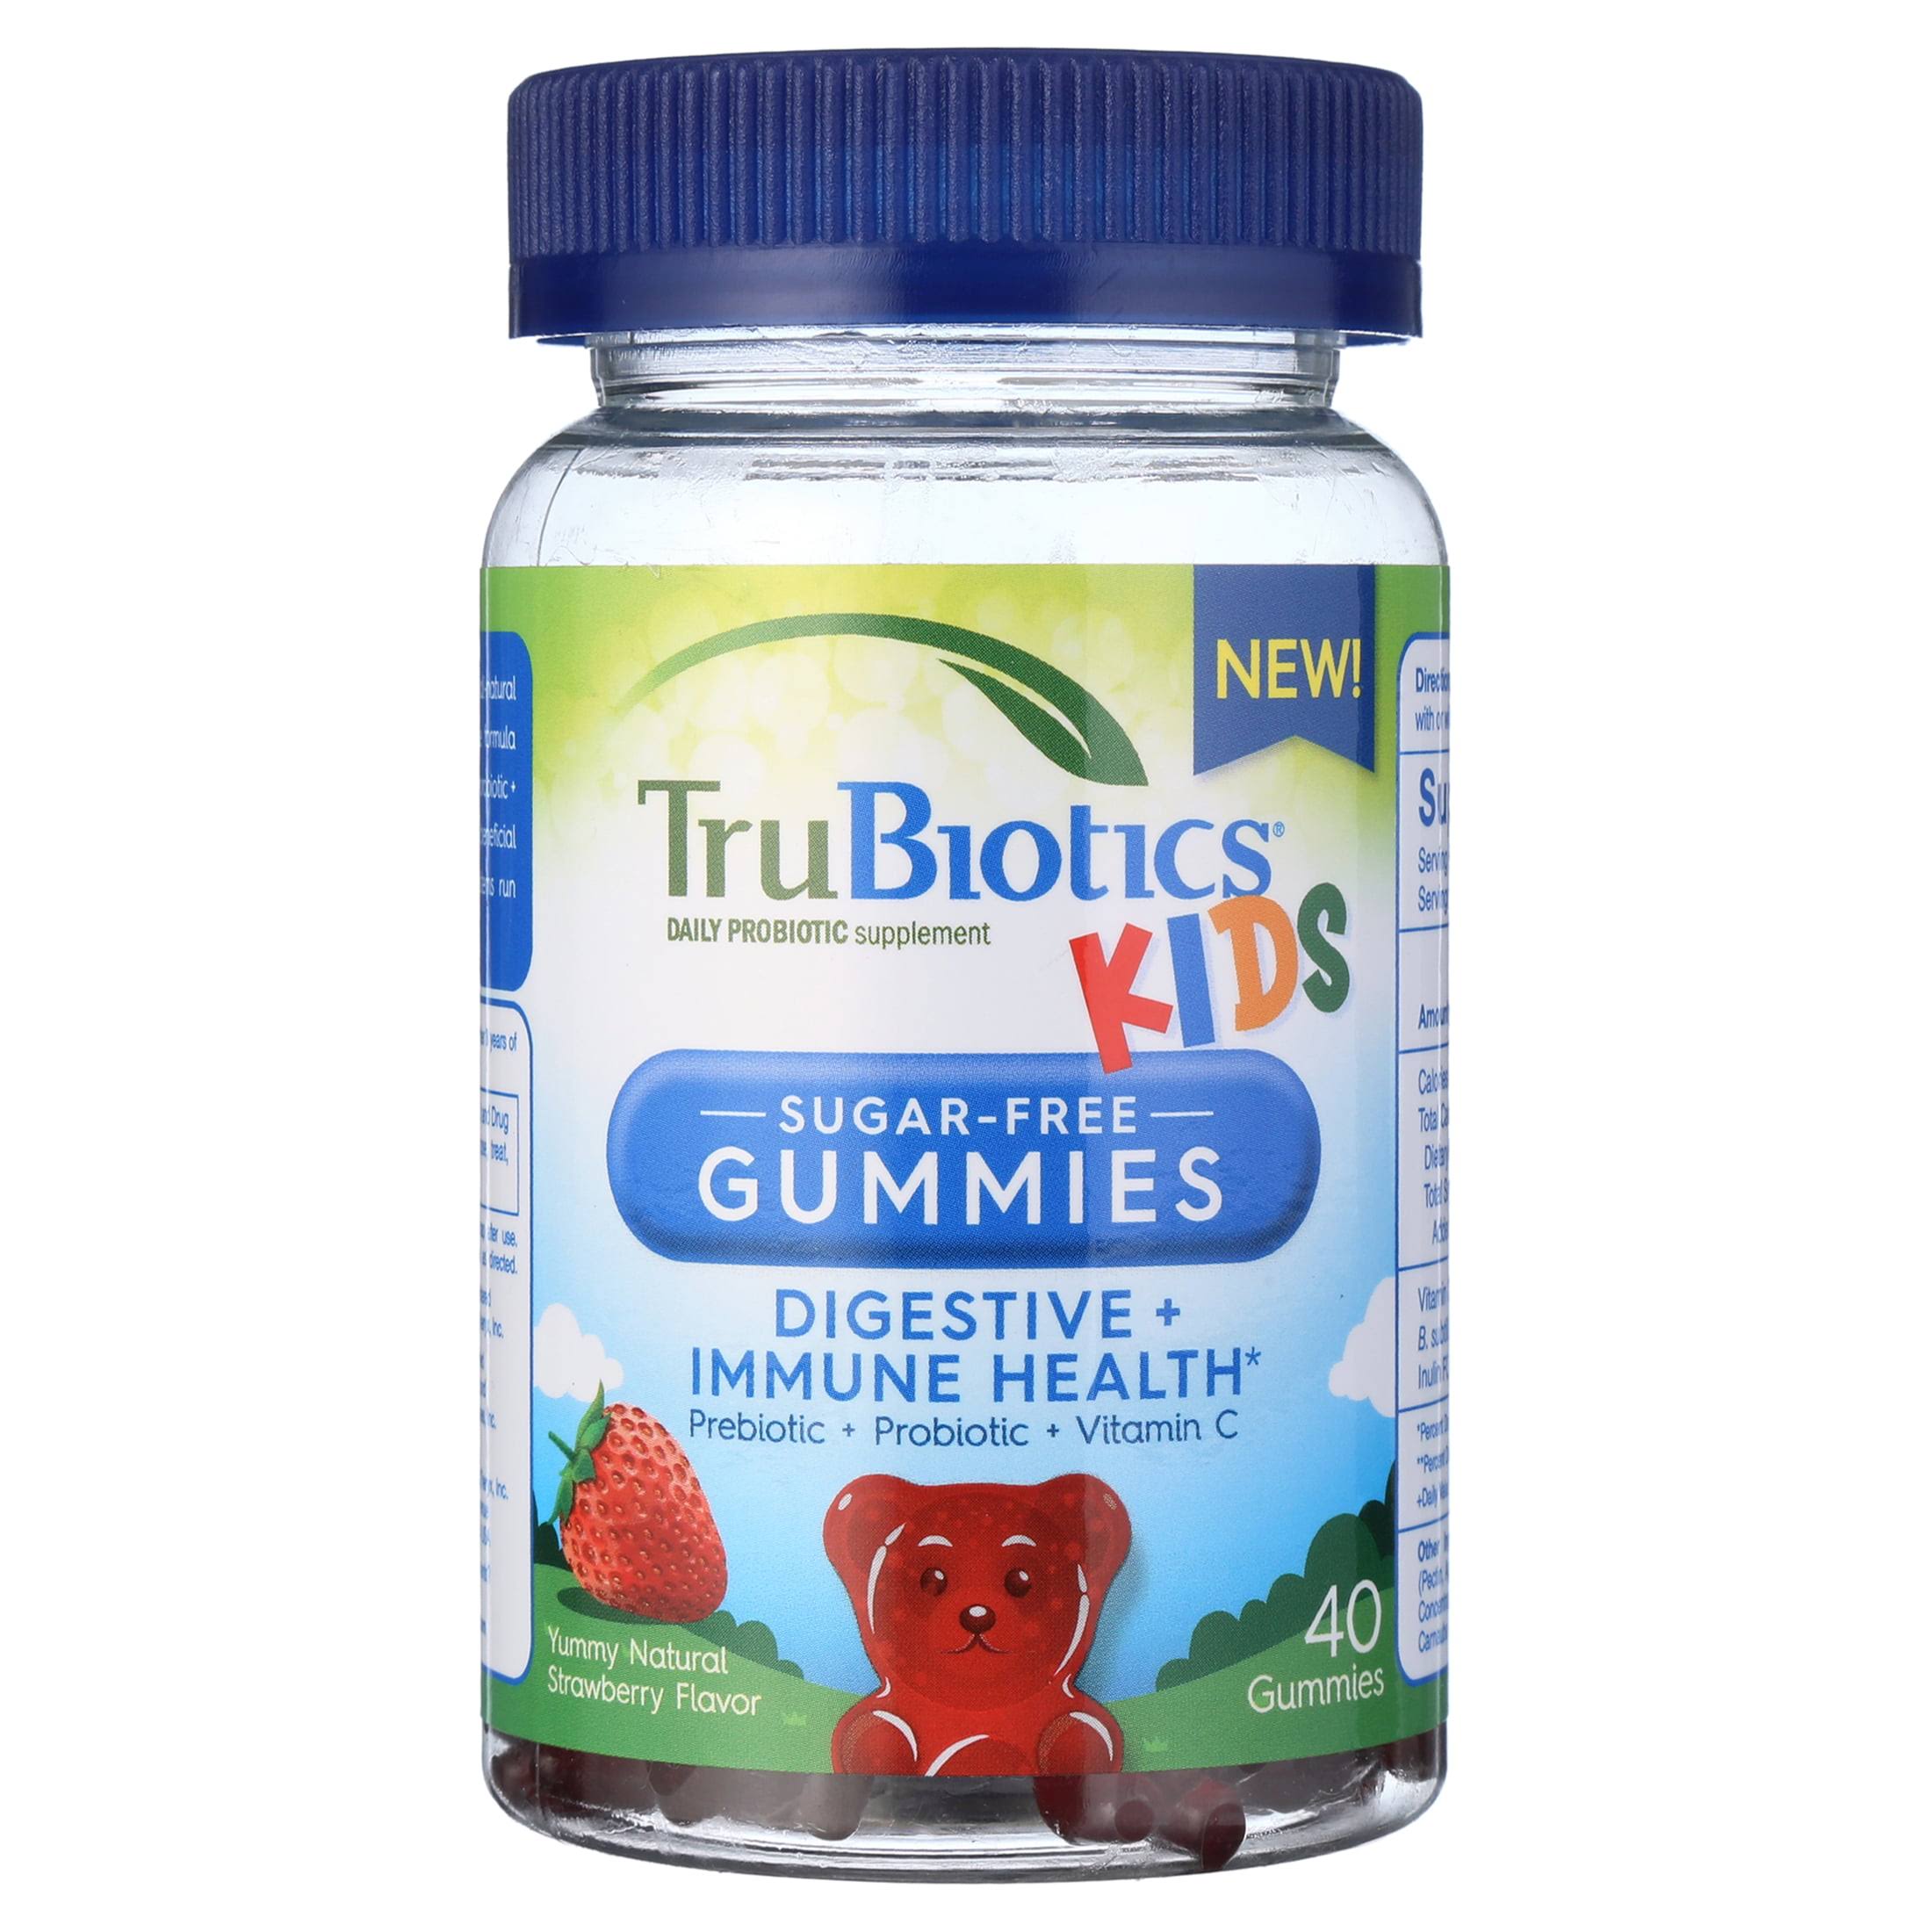 Trubiotics Digestive + Immune Health, Sugar-Free, Strawberry Flavor, Gummies - 40 gummies